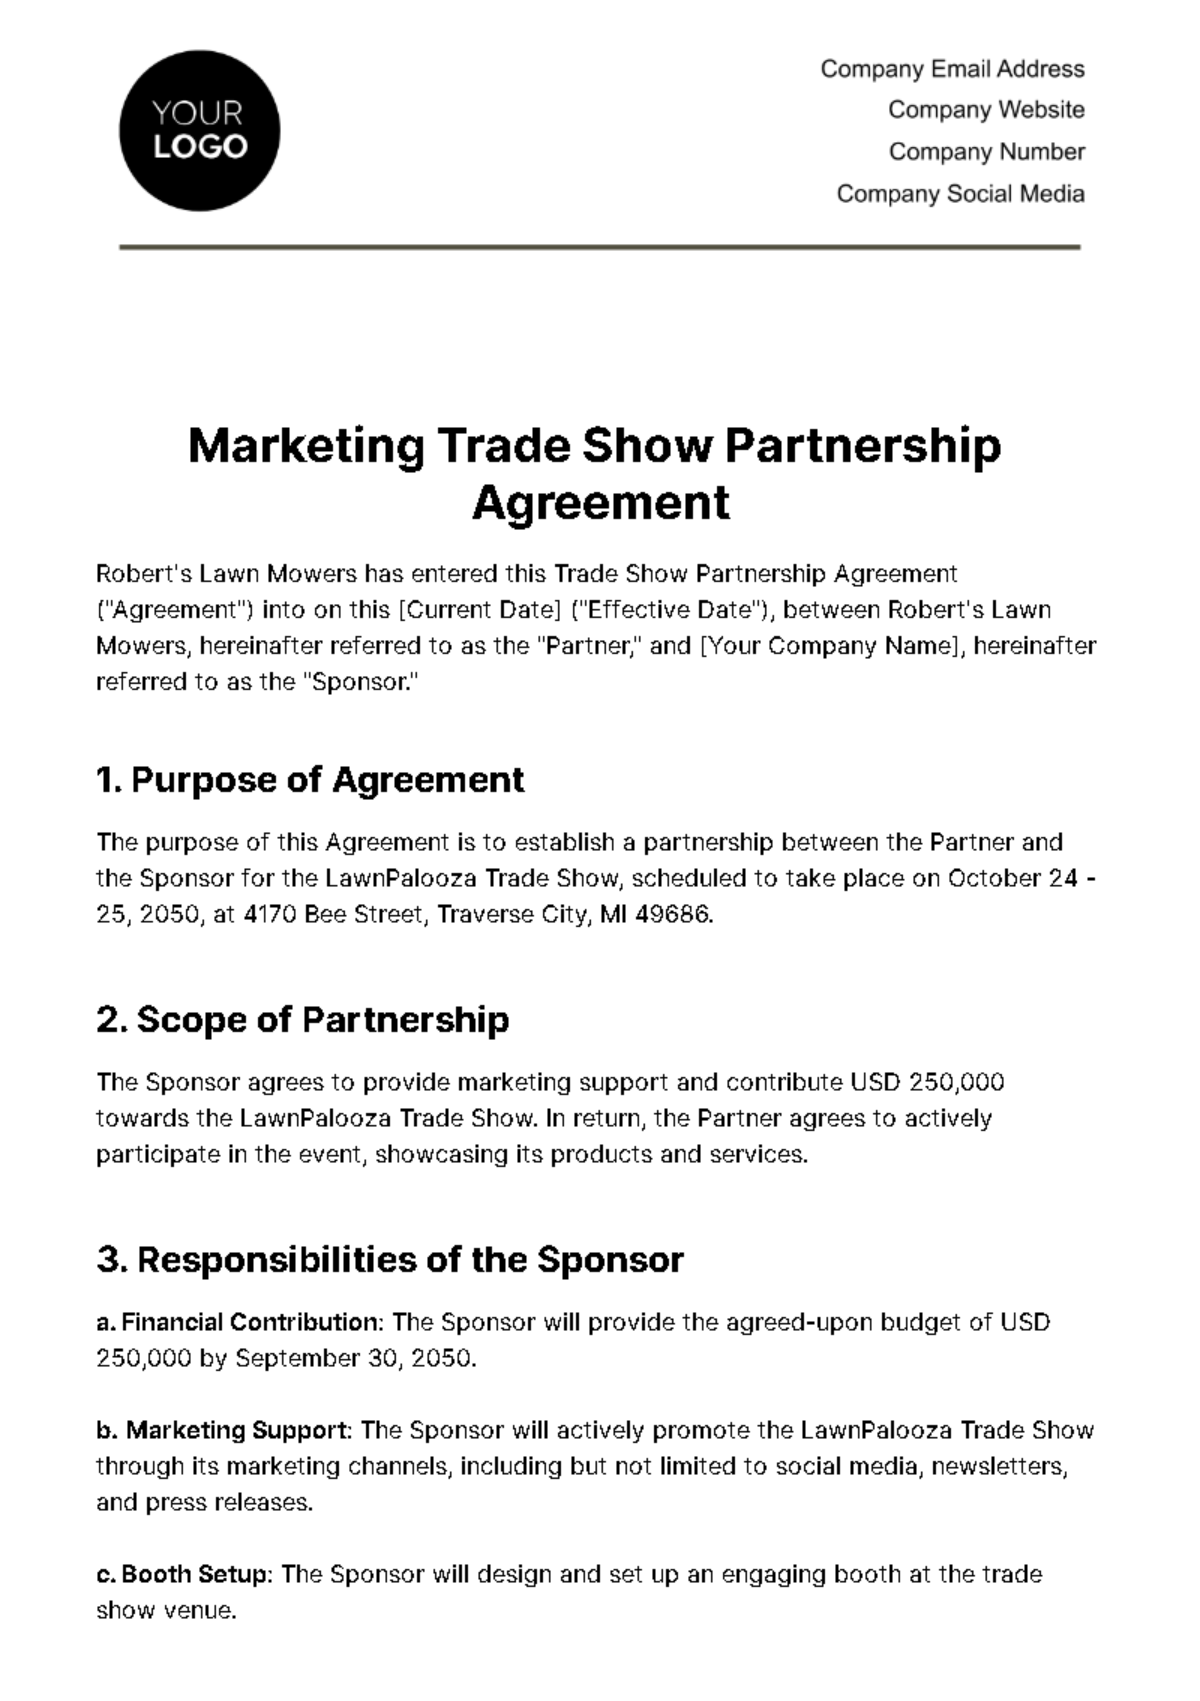 Marketing Trade Show Partnership Agreement Template